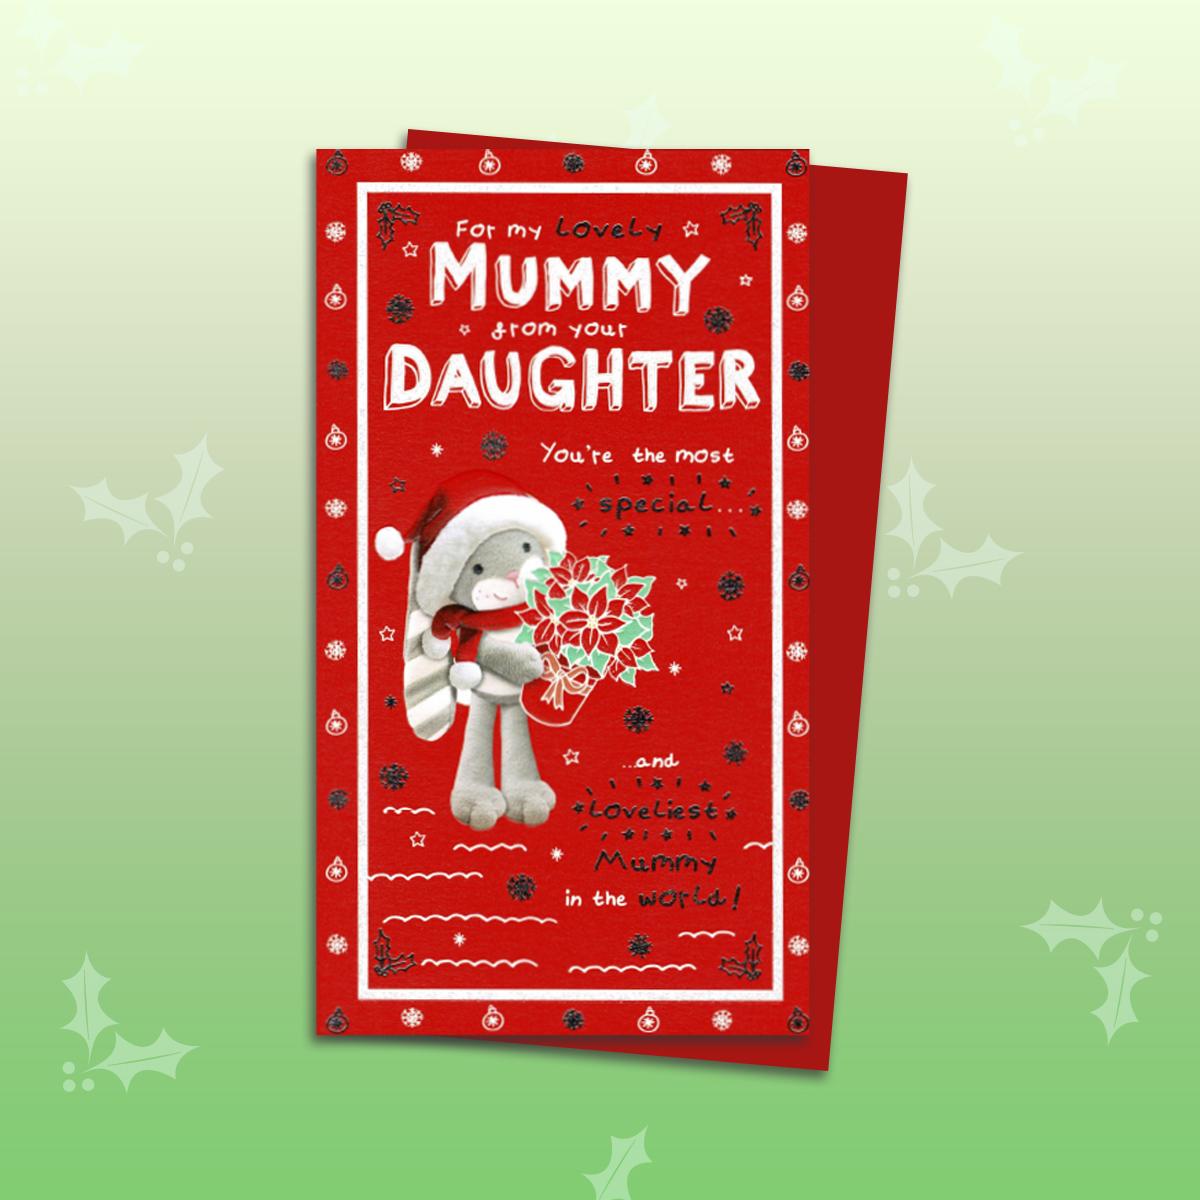 Mummy Christmas Card Alongside Its Red Envelope